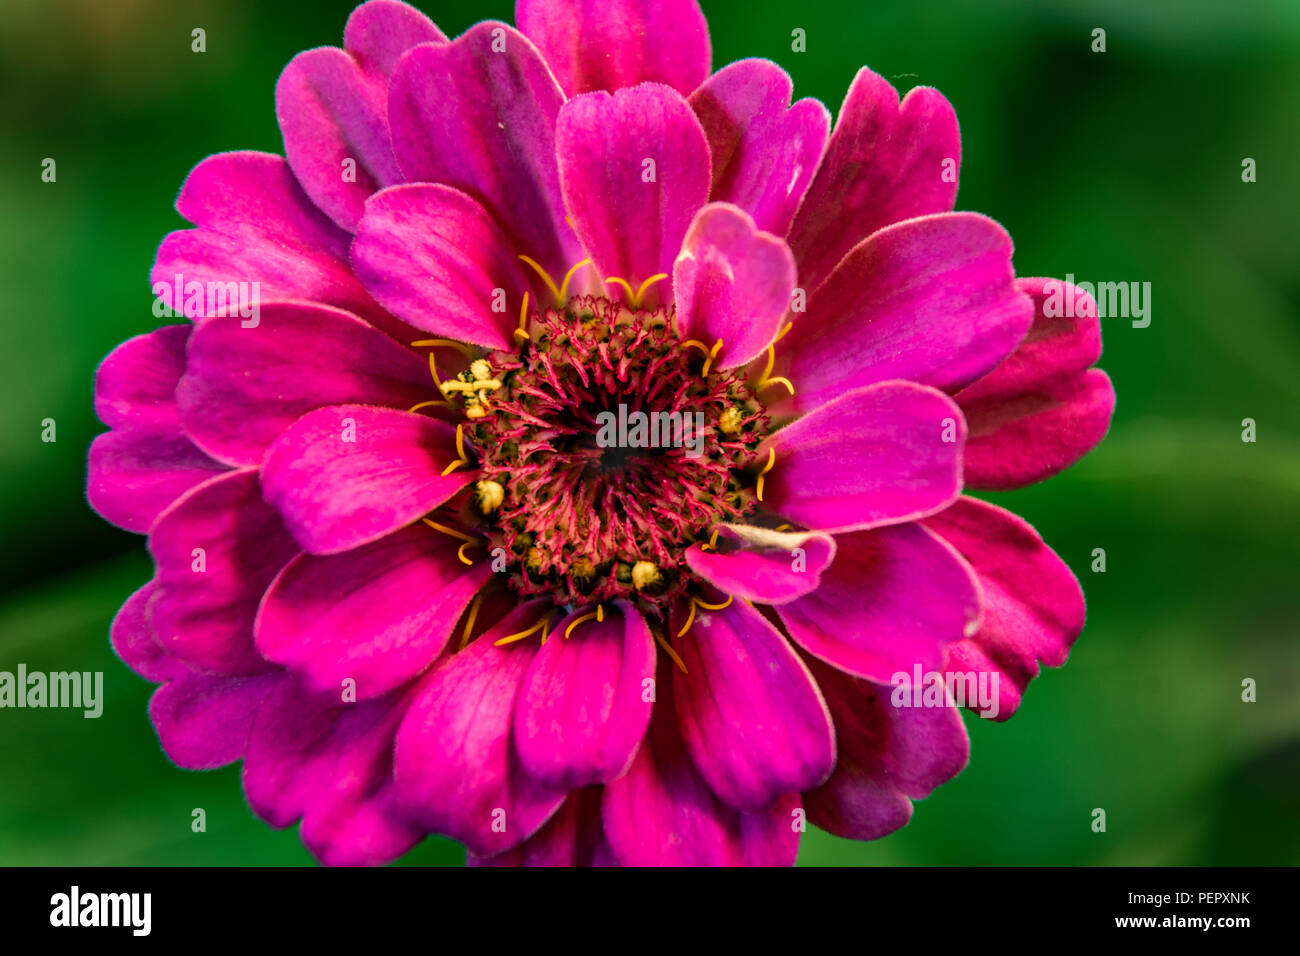 flower close-u of a pink daisy Stock Photo